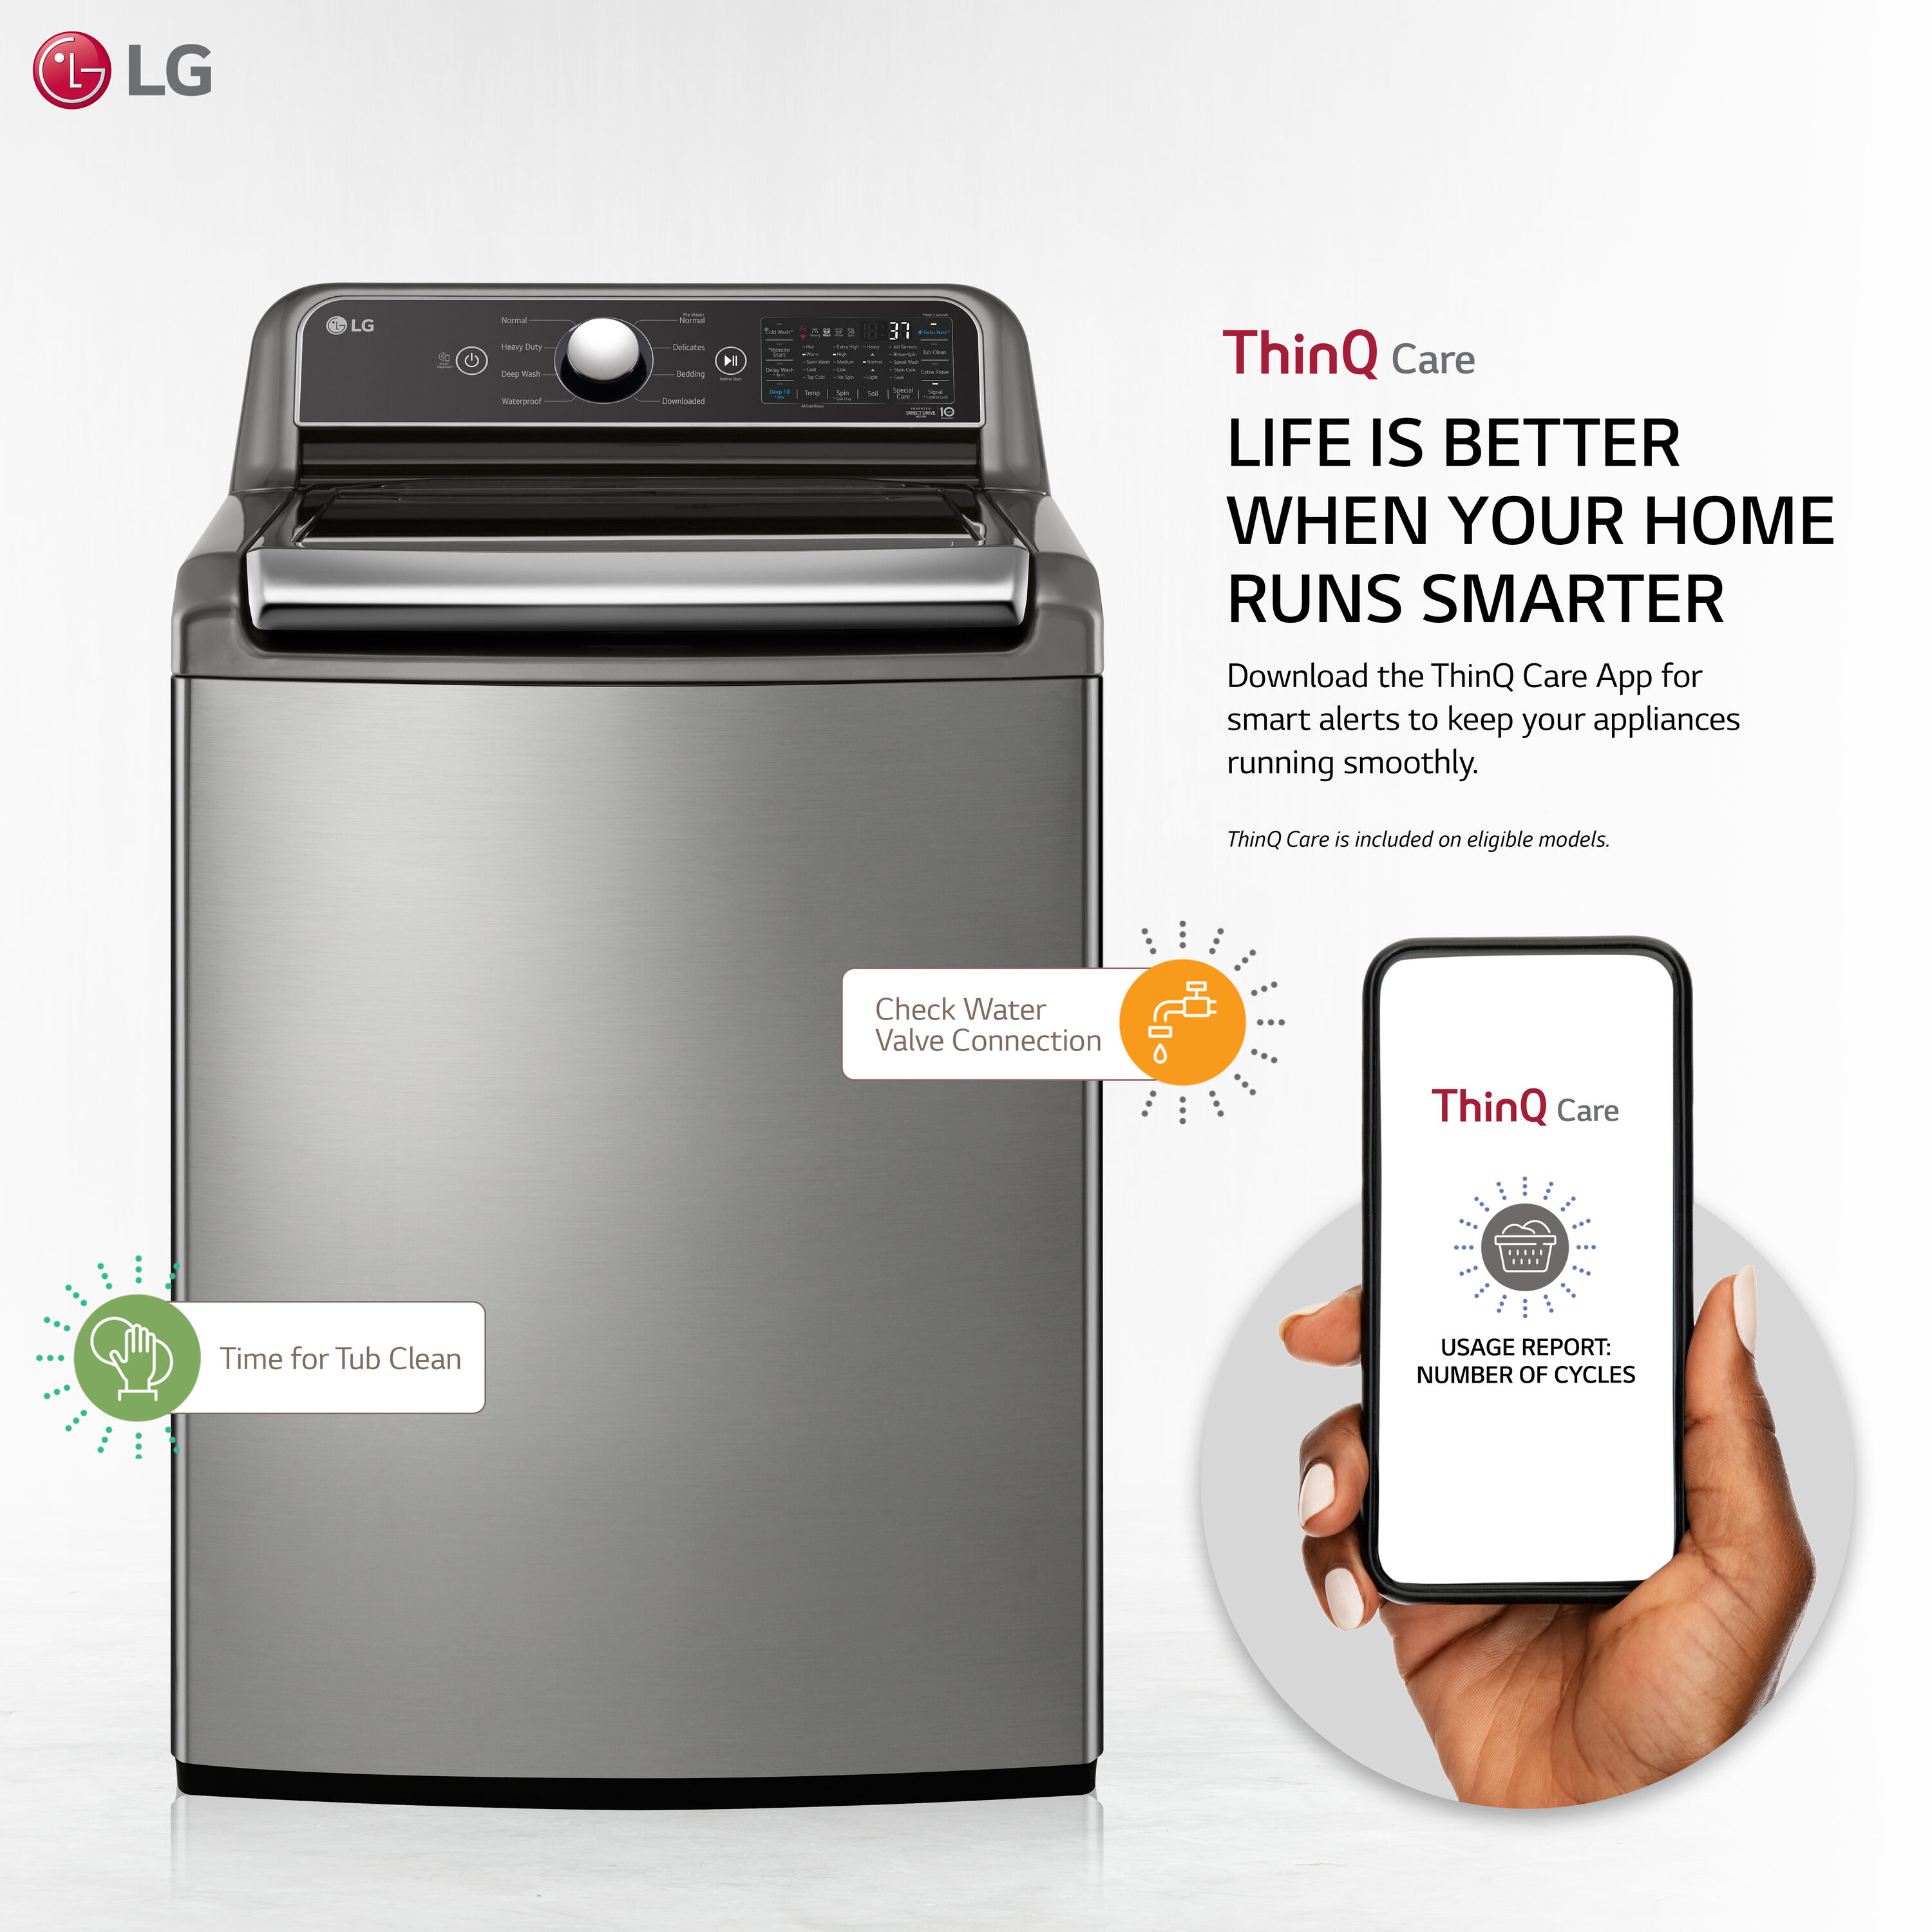 LG LG 5.3 Cu.Ft. Mega Capacity Smart Wi-Fi Enabled Top Load Washer with 4-Way Agitator & TurboWash3D Technology - White